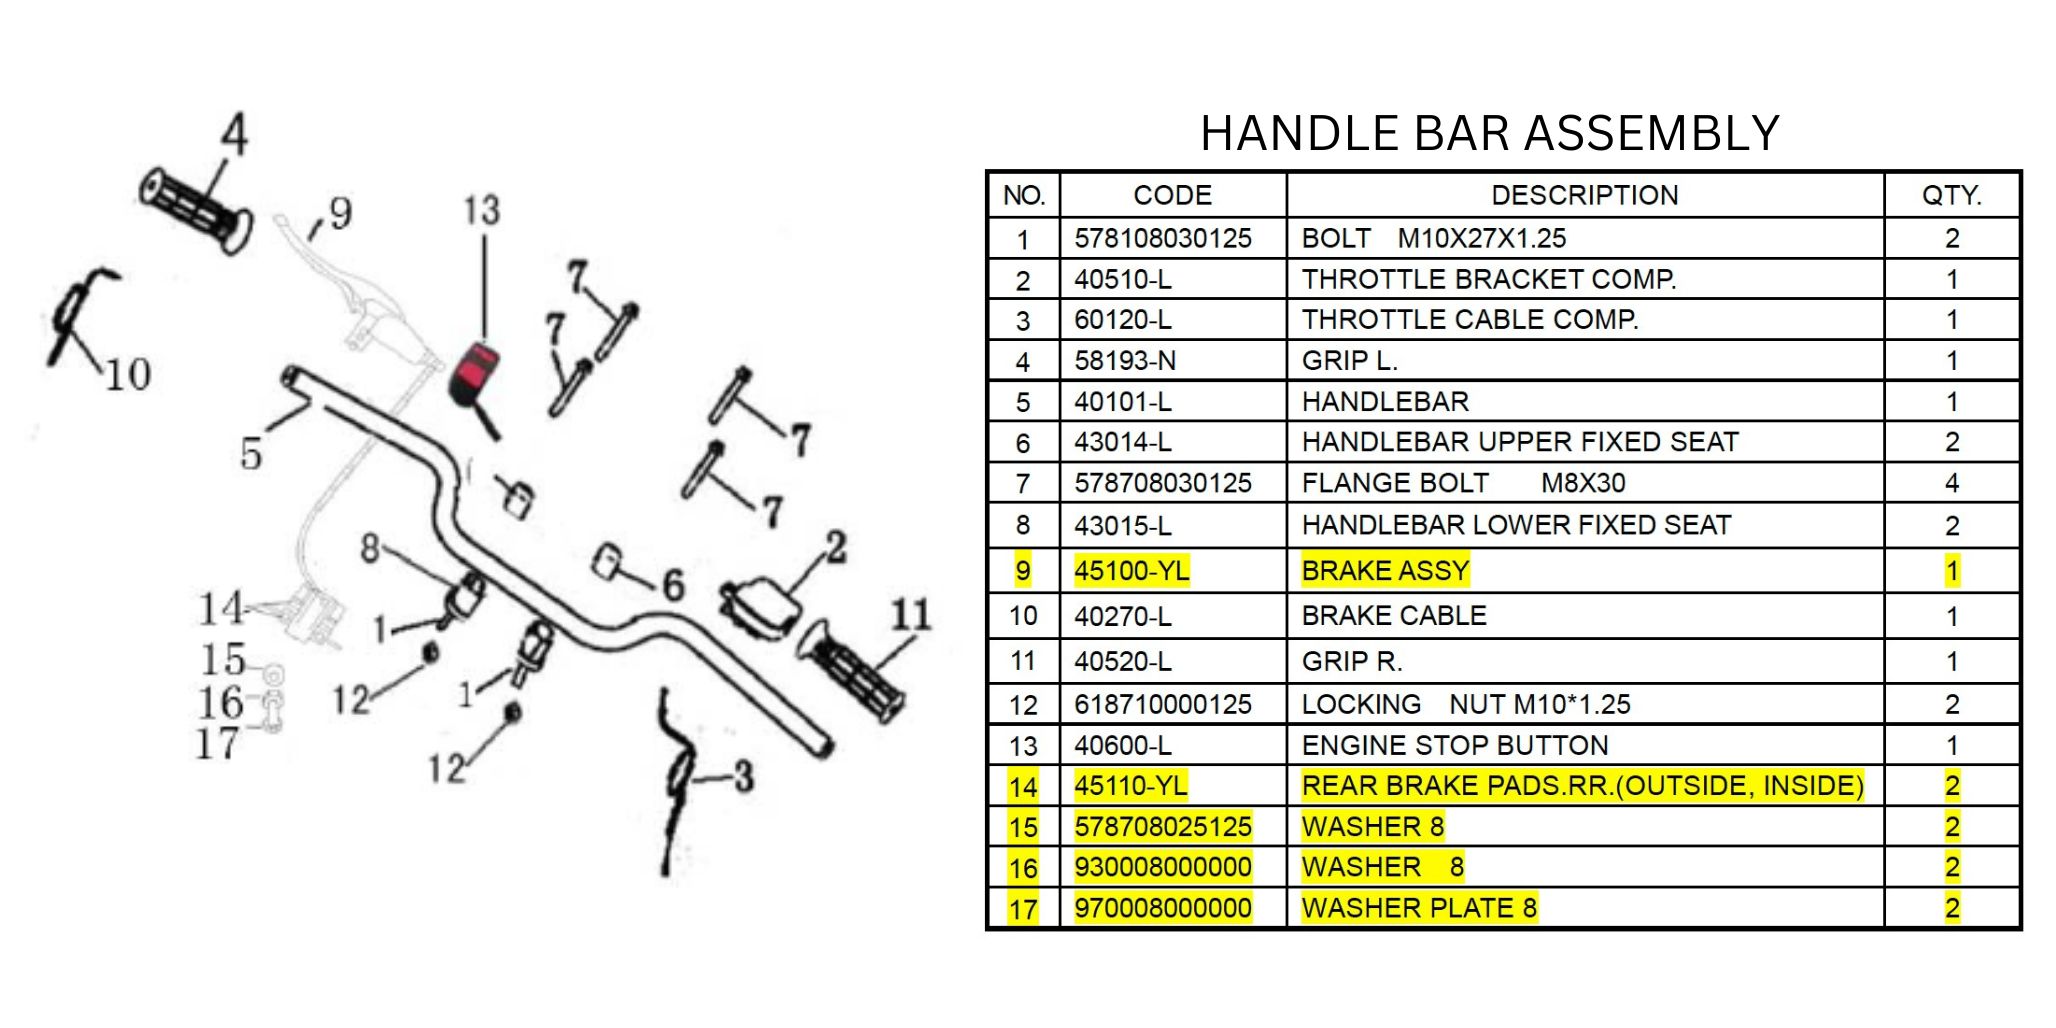 handle-bar-assembly-v2.jpg